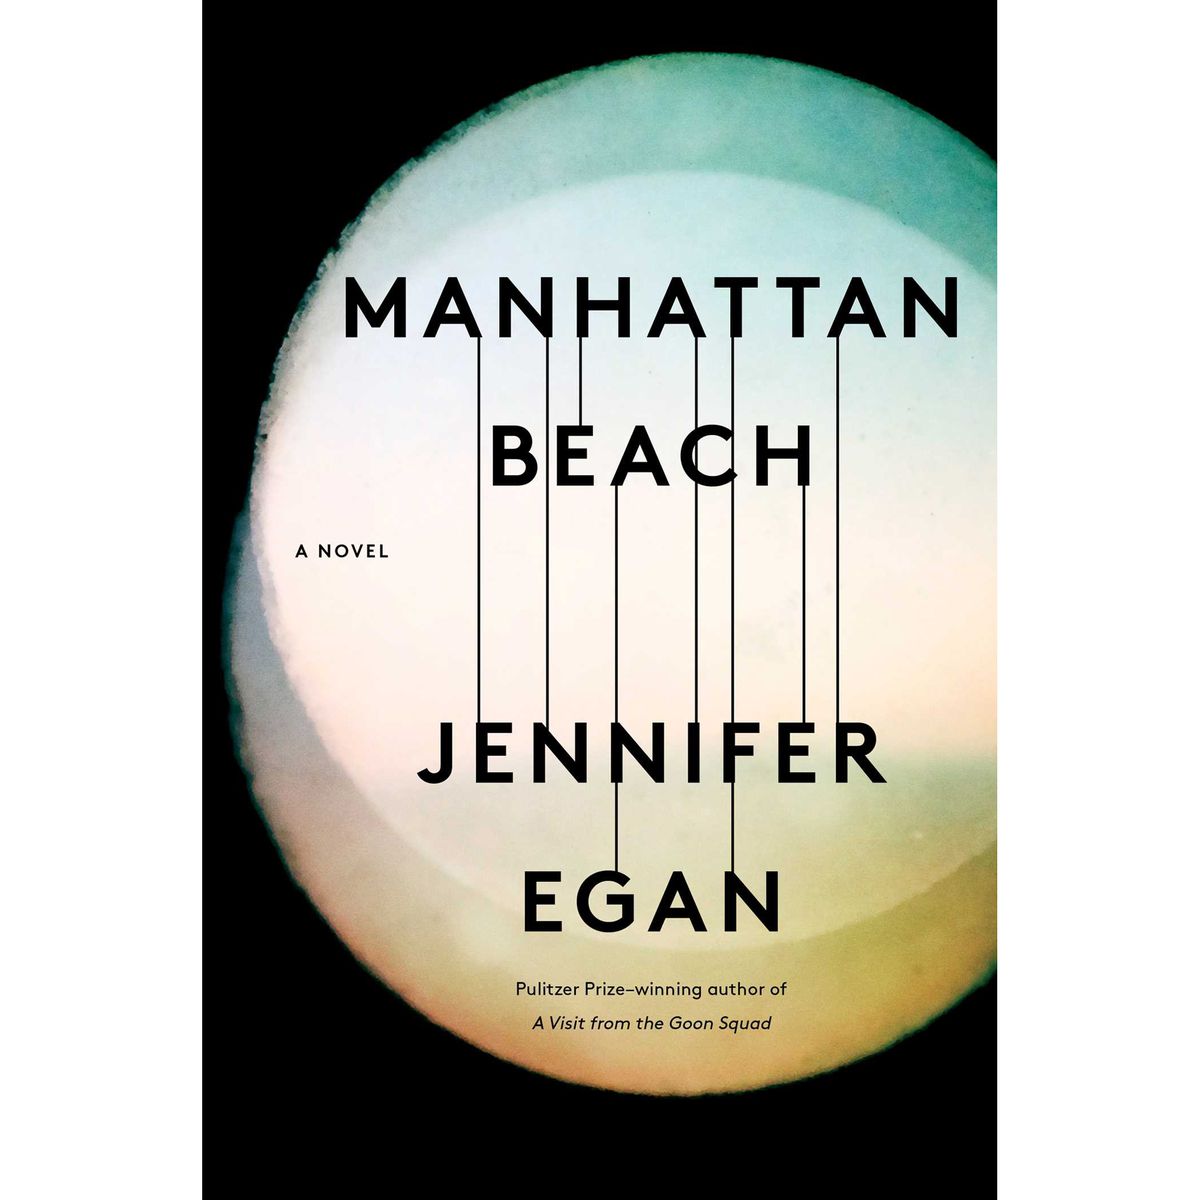 MANHATTAN BEACH BY JENNIFER EGAN